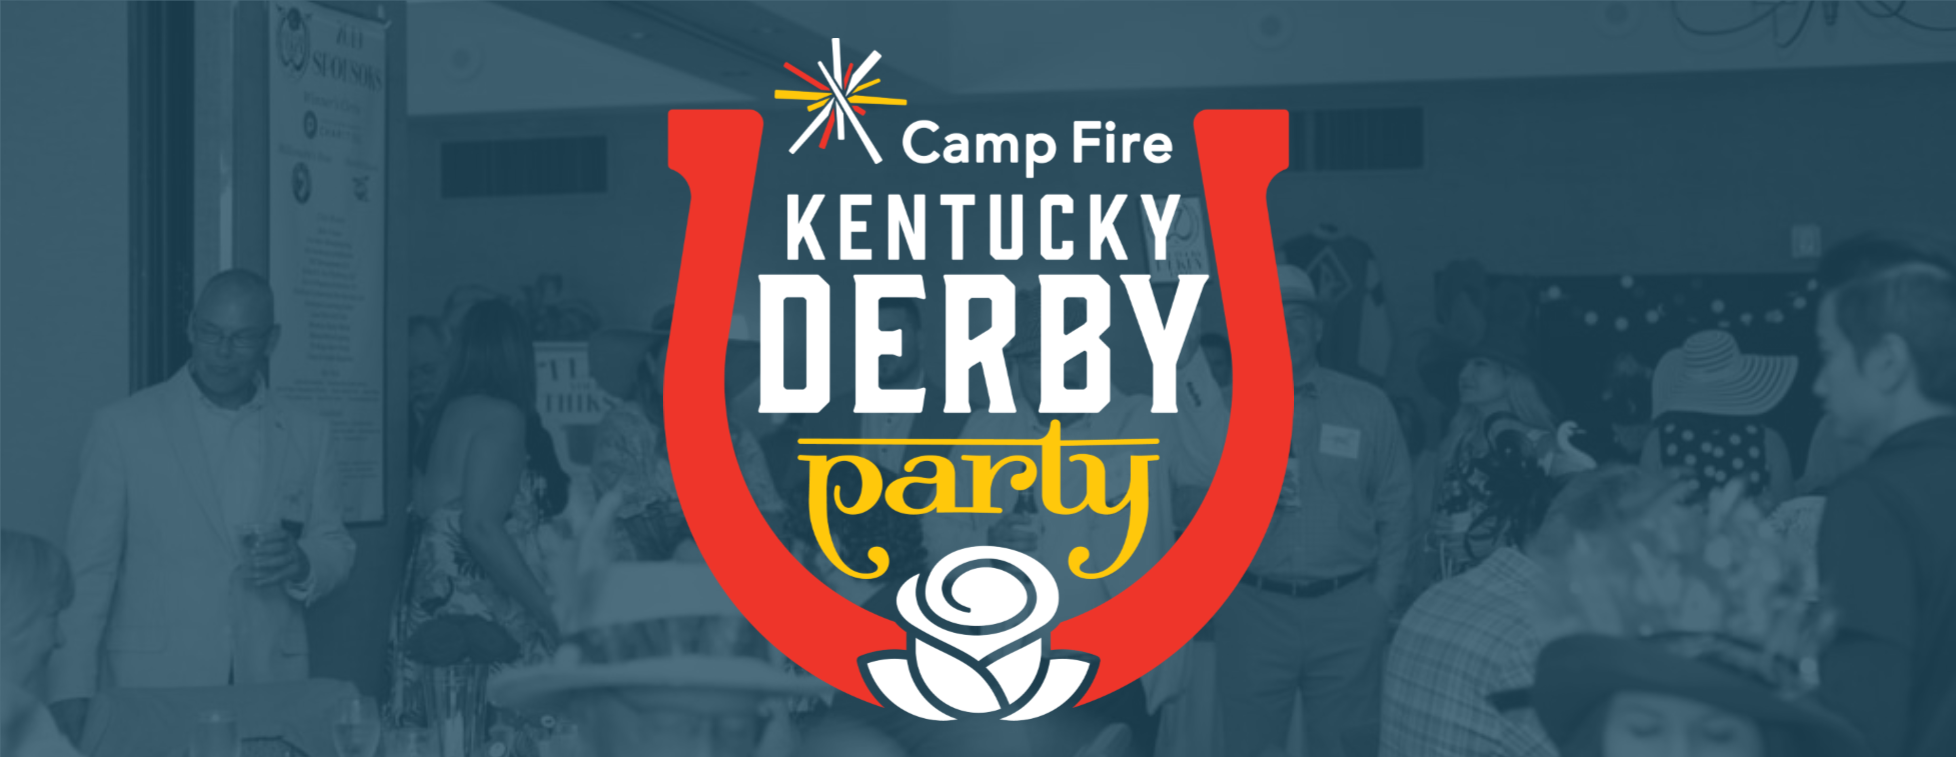 2022 Camp Fire Kentucky Derby Party